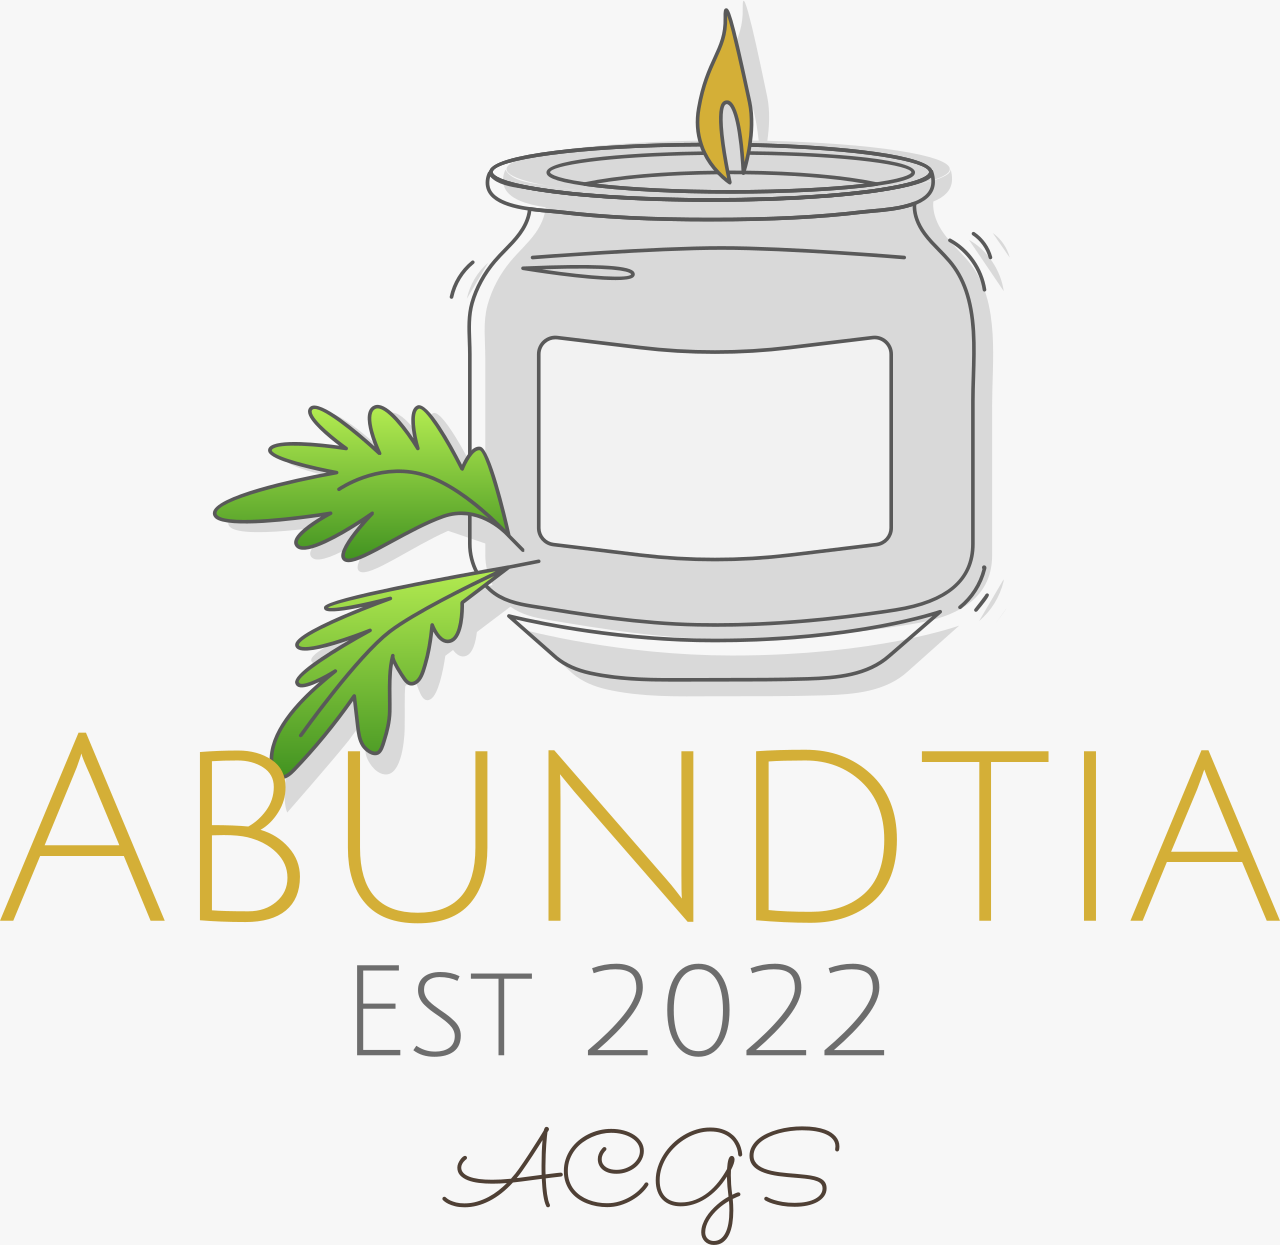 Abundtia's web page